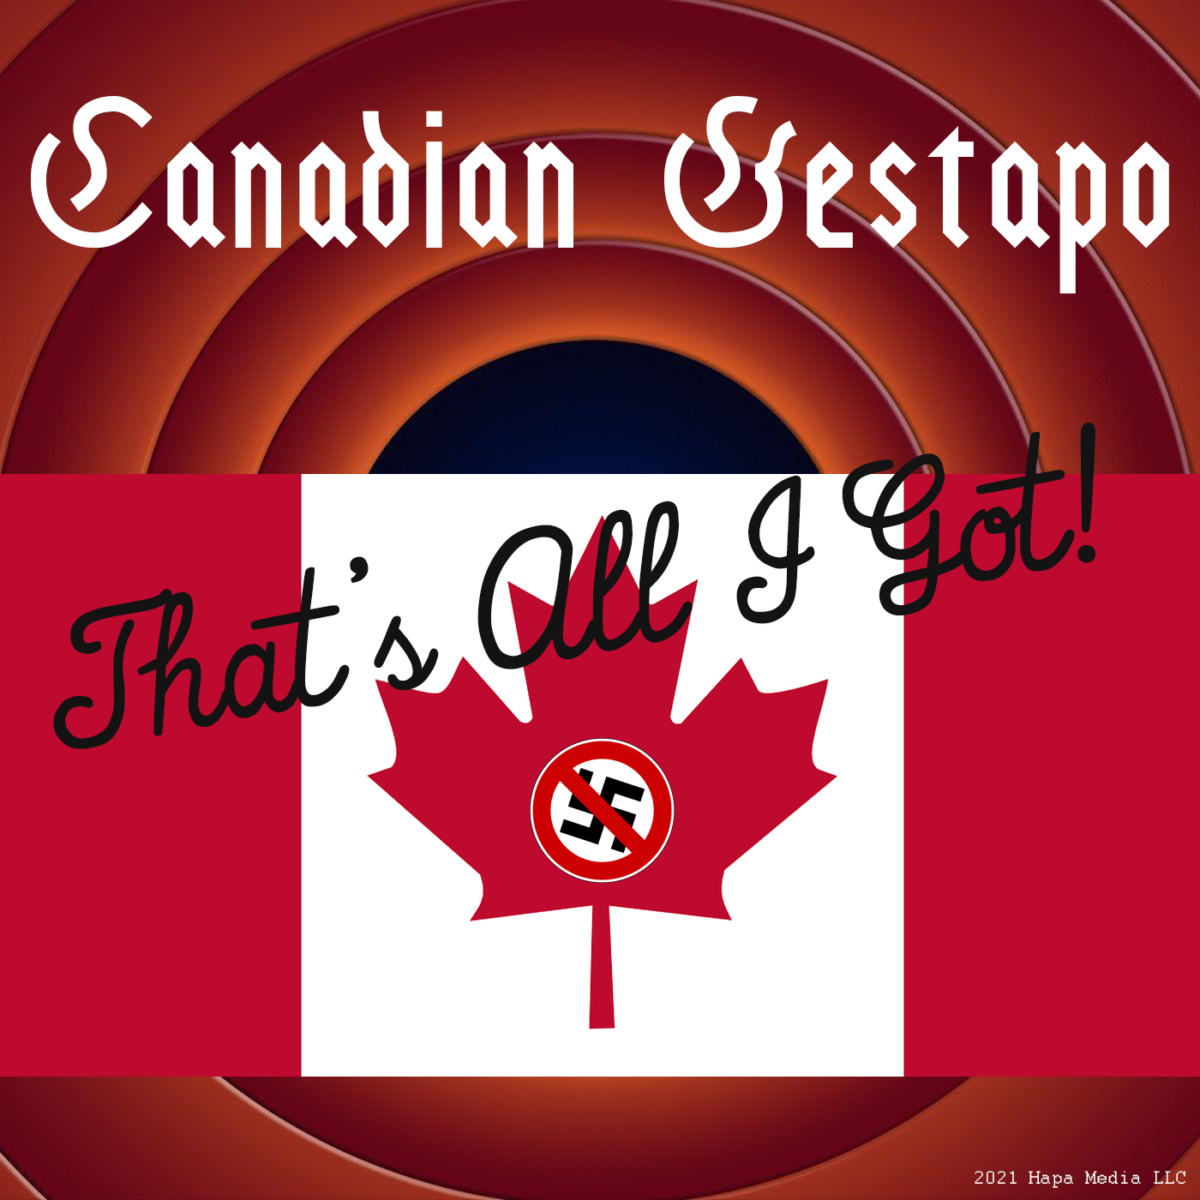 Canadian Gestapo